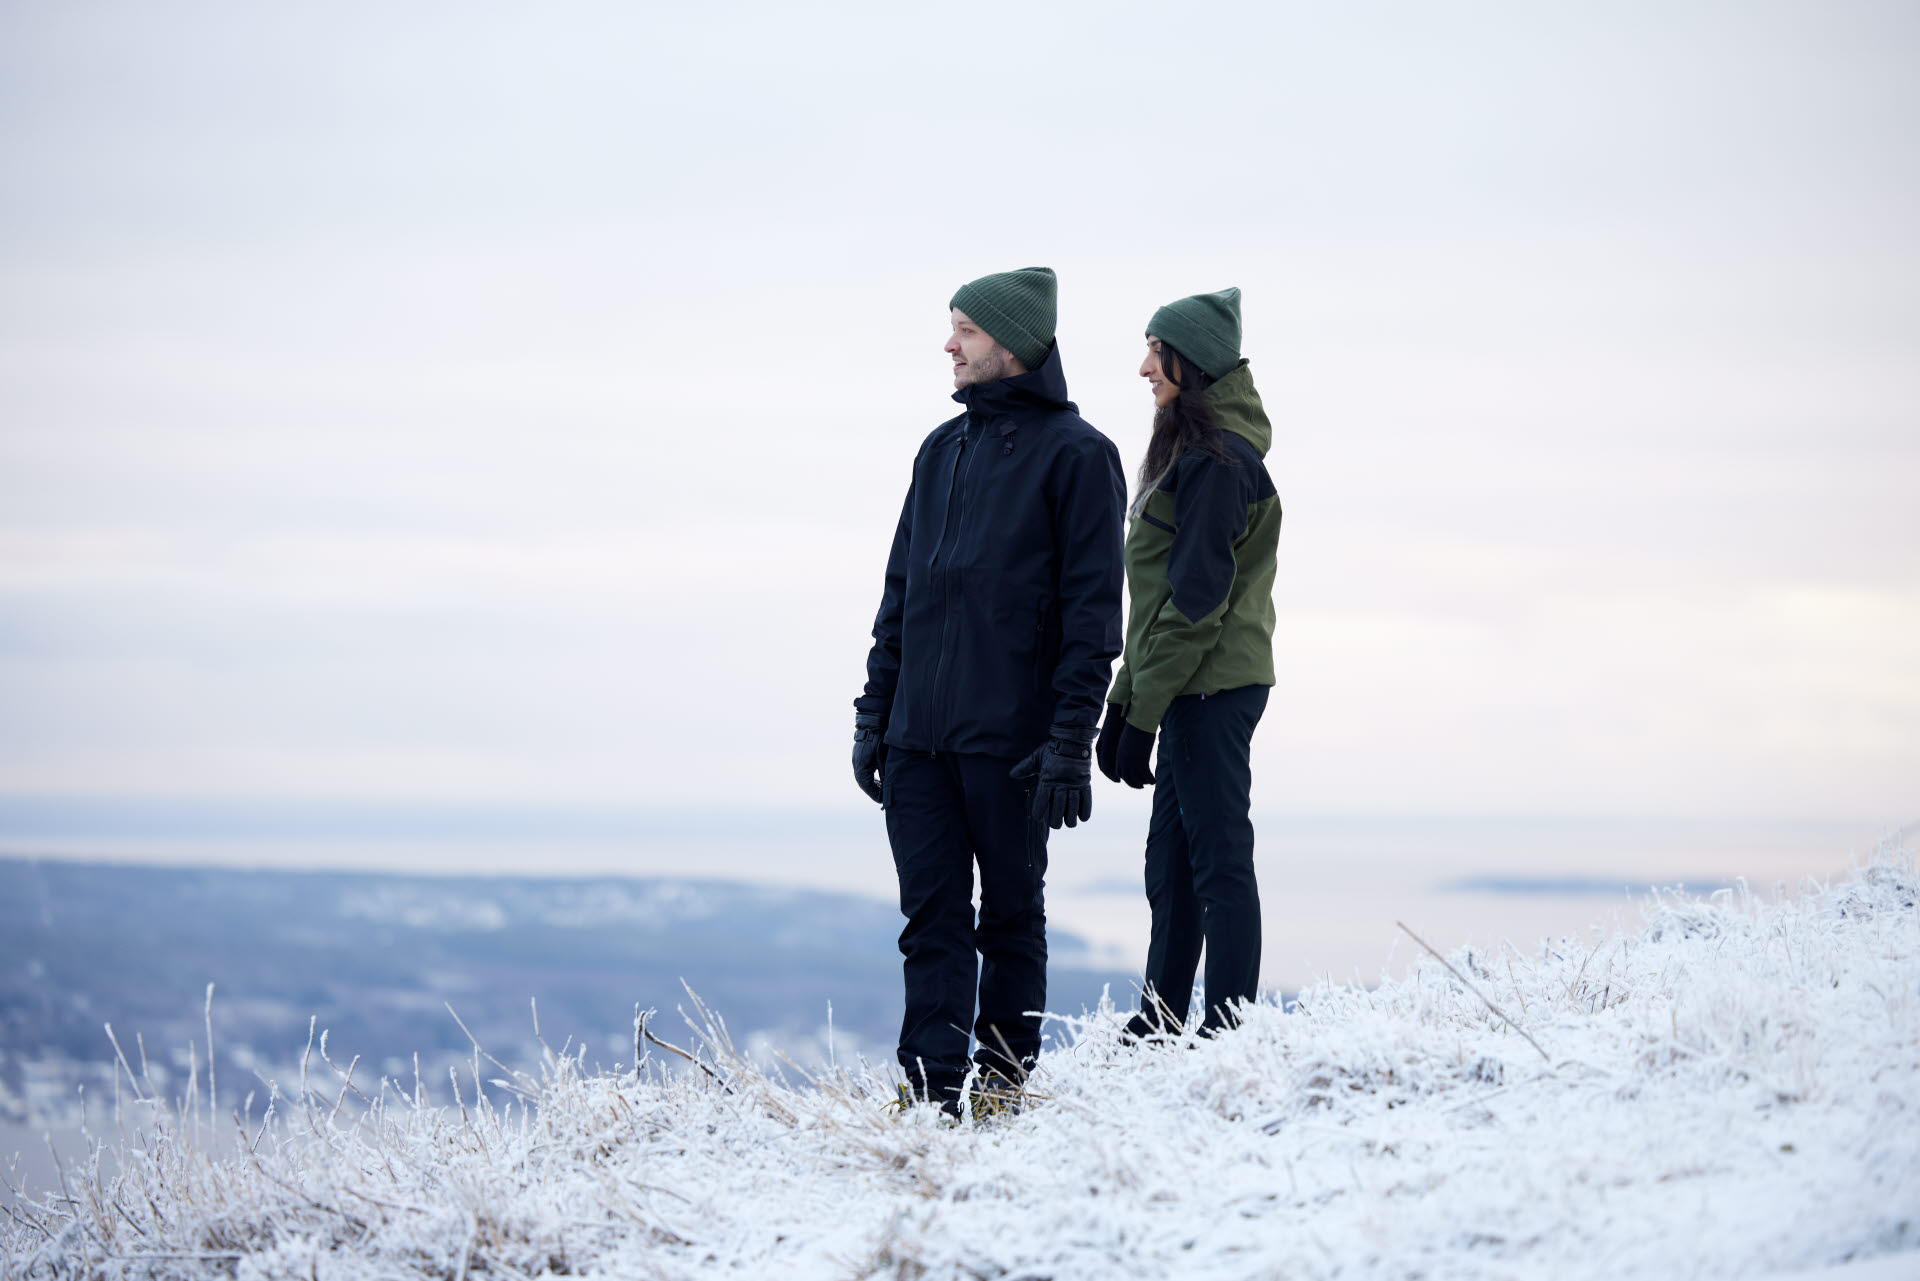 Two people in a winter landscape.